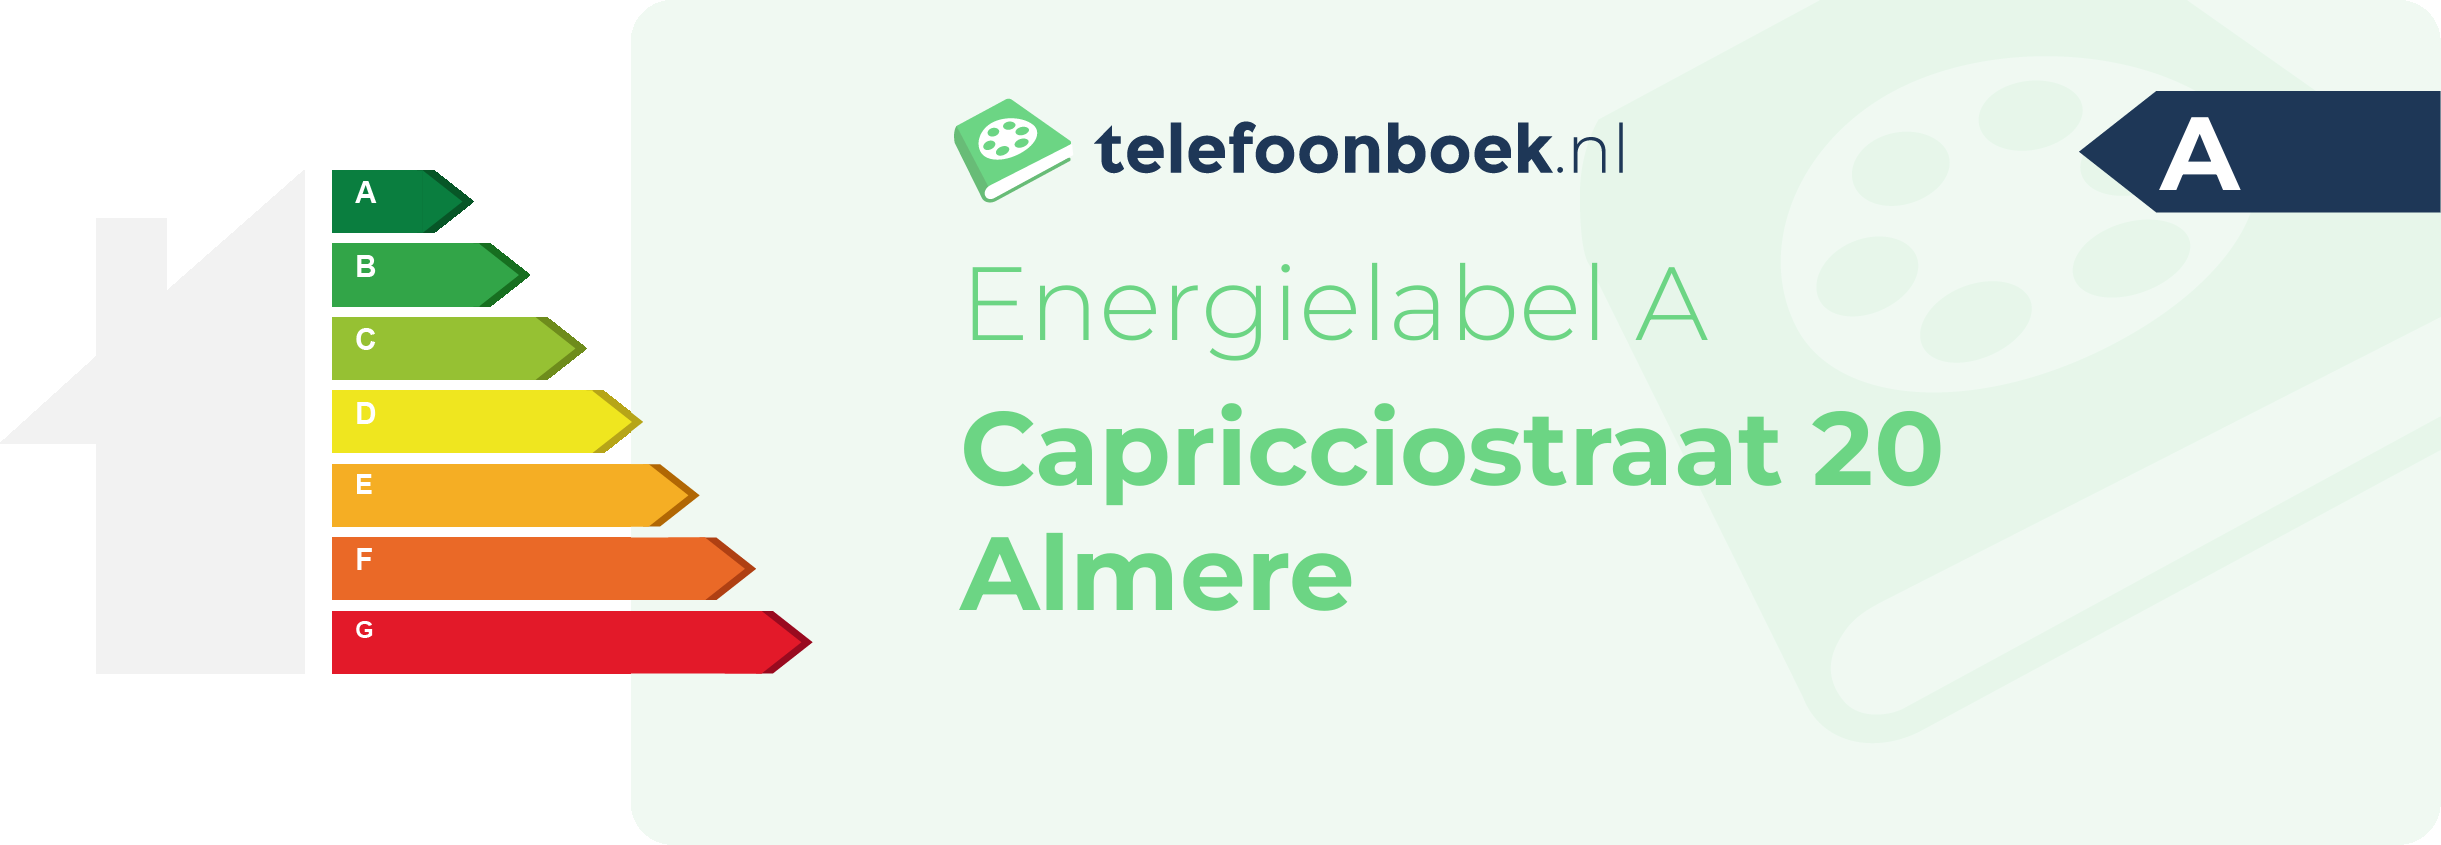 Energielabel Capricciostraat 20 Almere